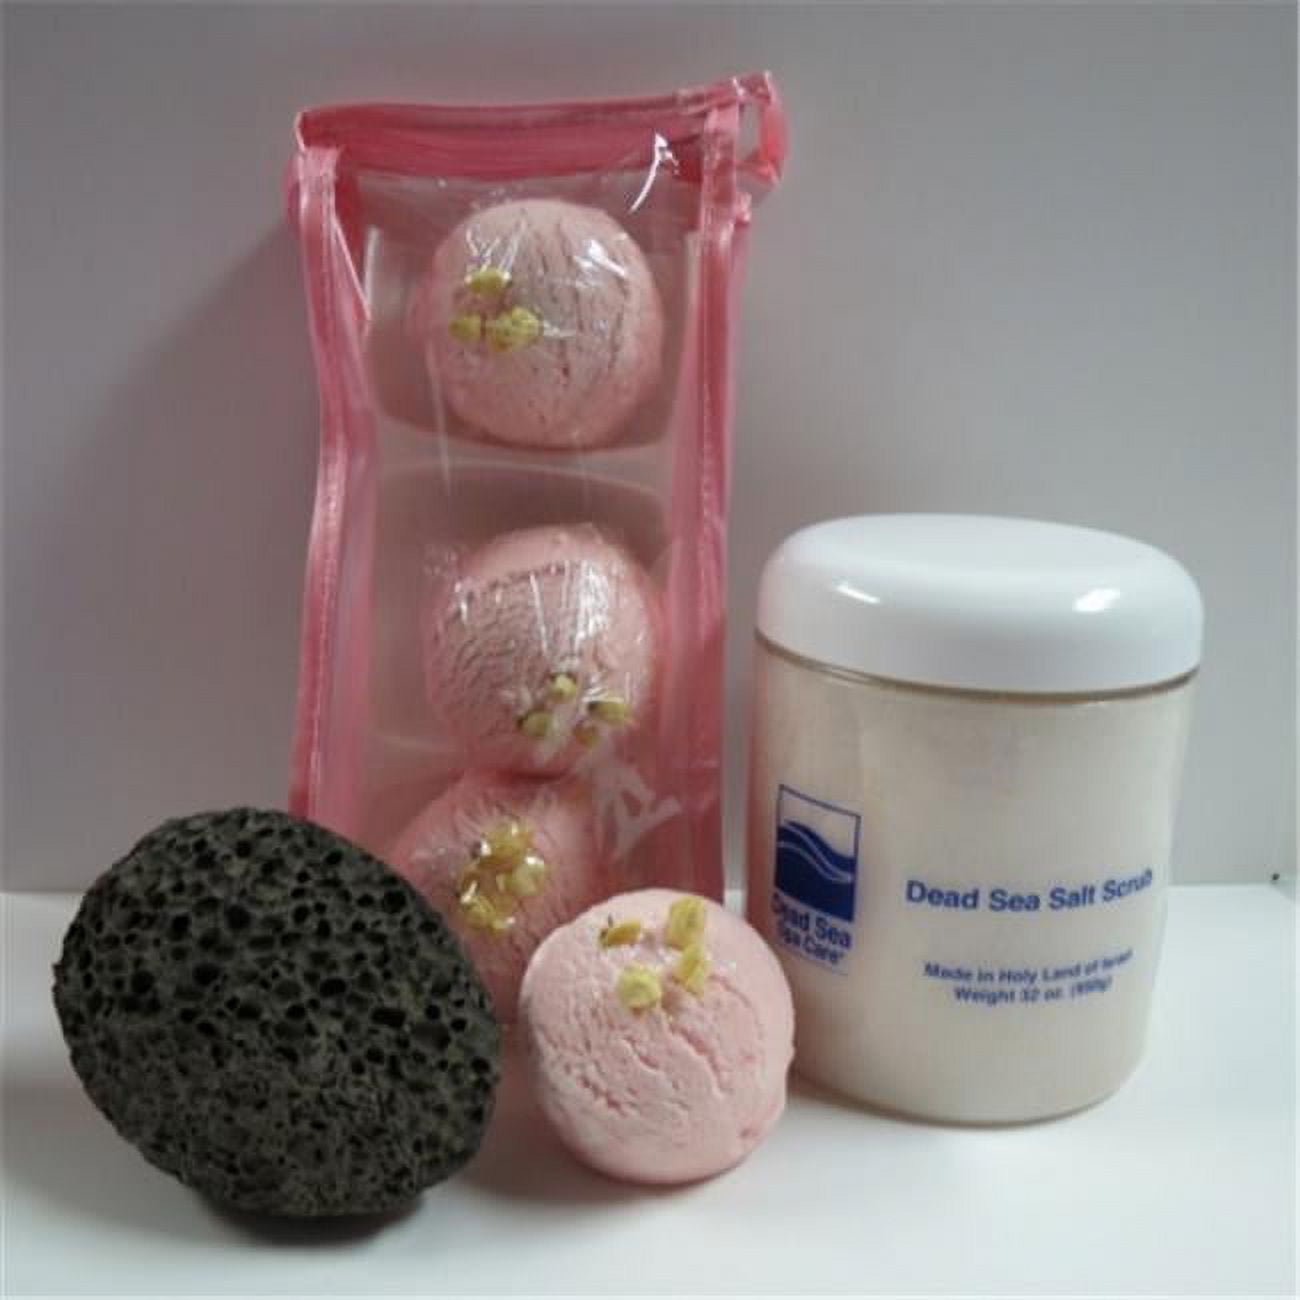 Deadsea-bbtal07 3 Pack Cherry Almond Bubble Bath Truffles, 32 Oz Almond Dry Salt Scrub & Pumice Stone